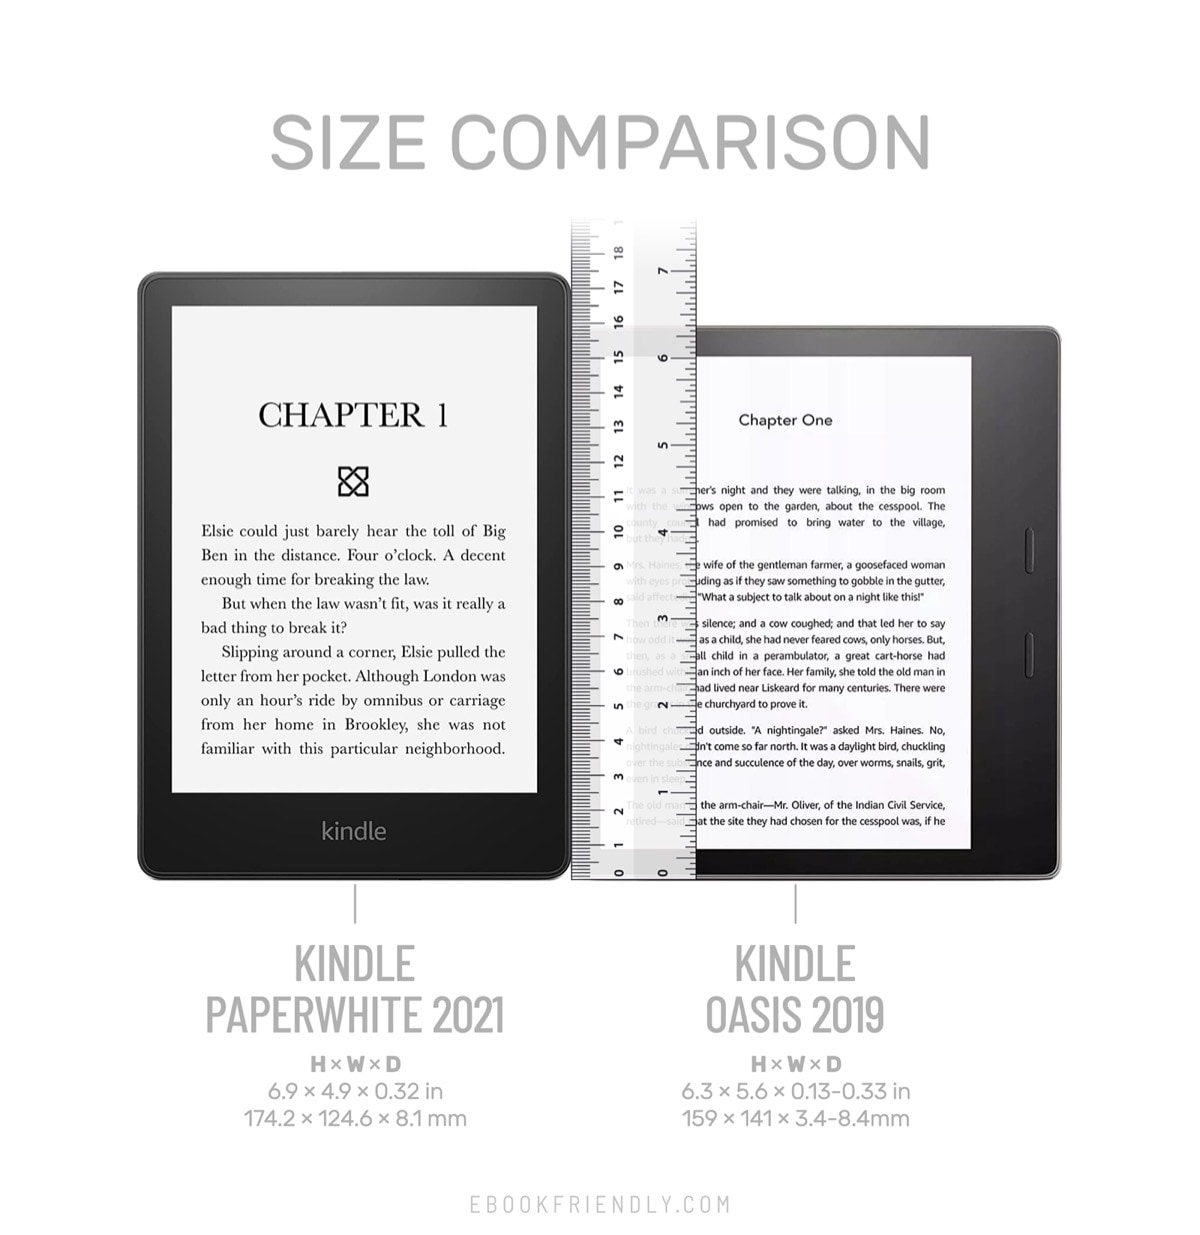 Kindle Paperwhite 6.8 2021 size compared Kindle Oasis 3